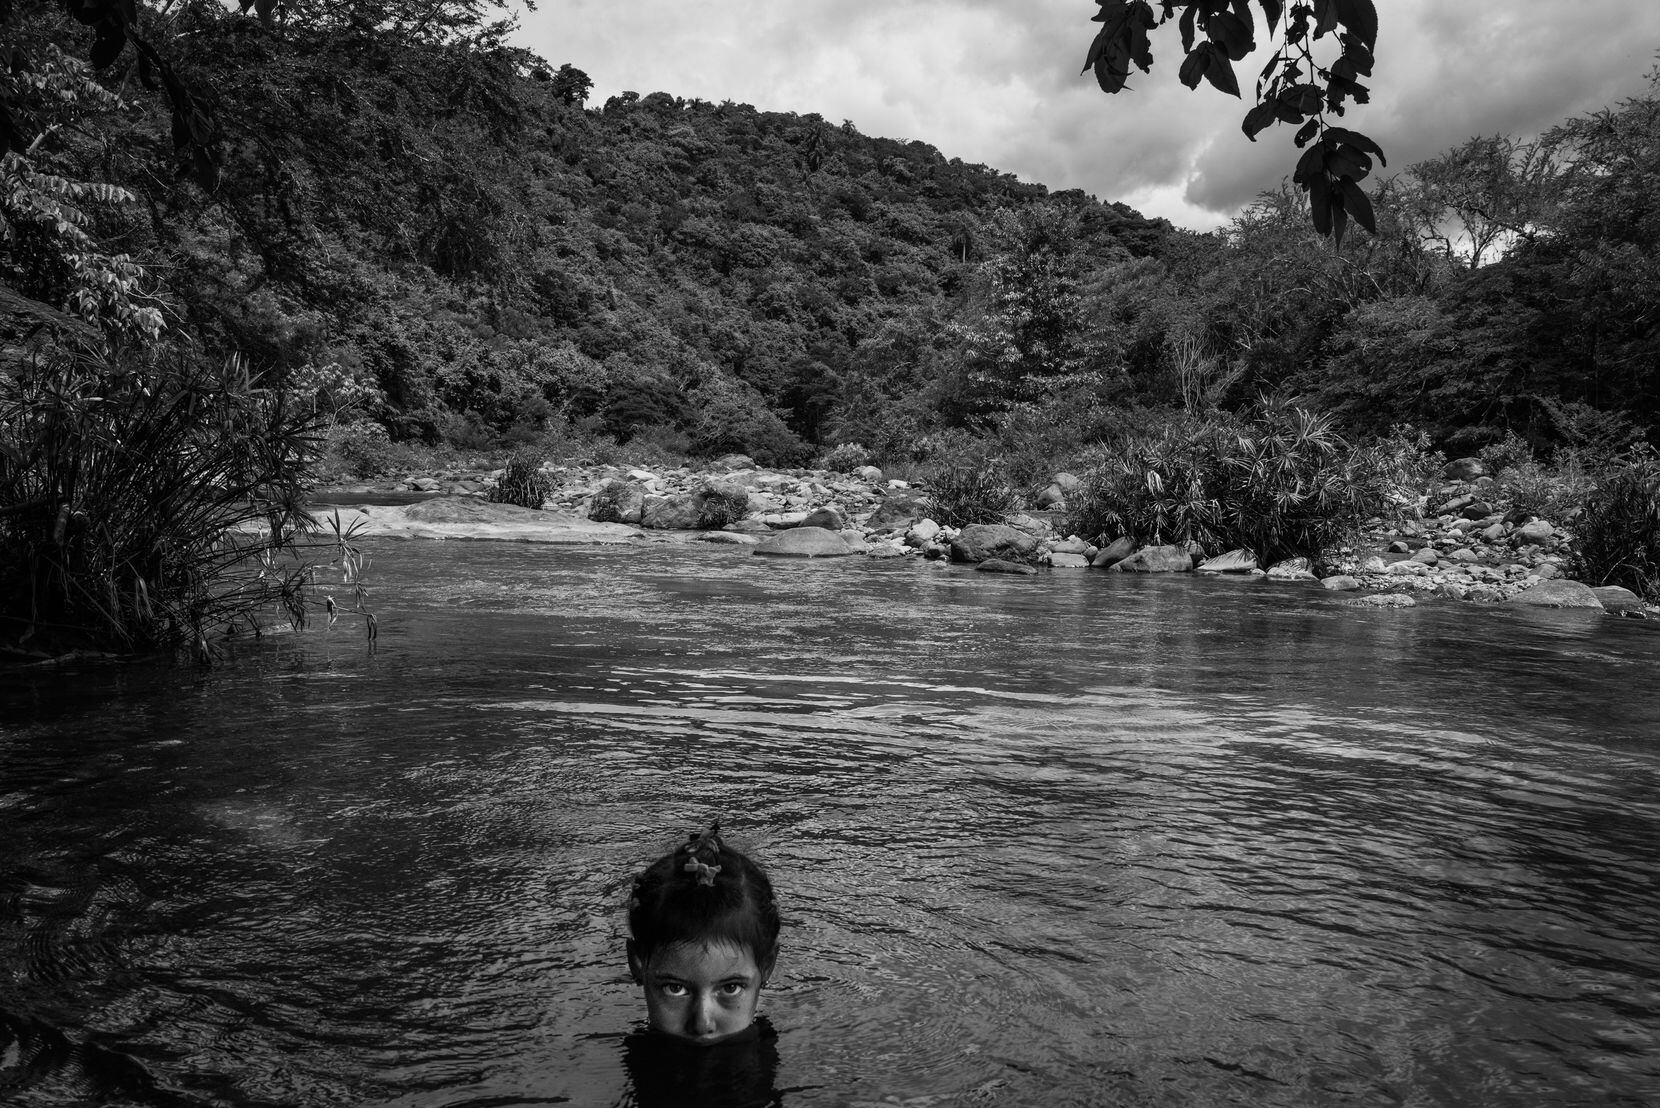 A child swims in the Yara River, near Cuba's Sierra Maestra mountain range.